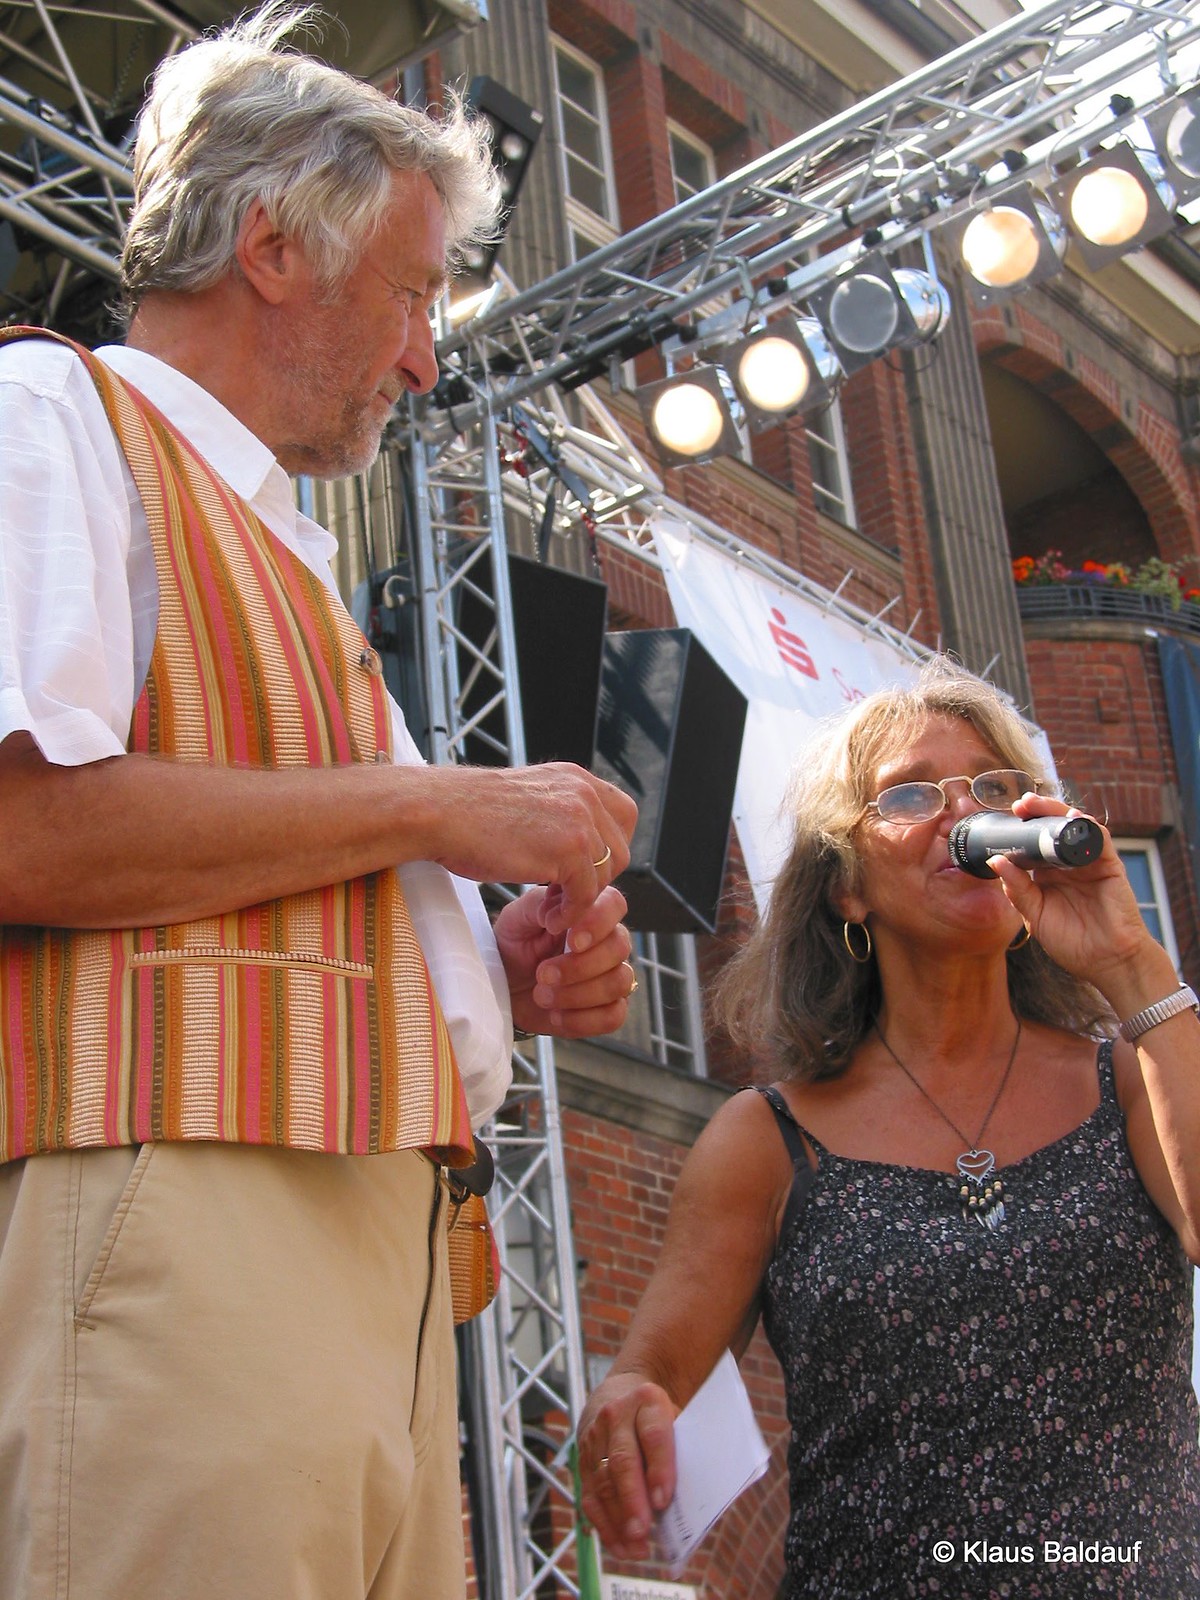 HanseStadtFest "Bunter Hering" vom 7. - 9. Juli 2006 in Frankfurt (Oder)